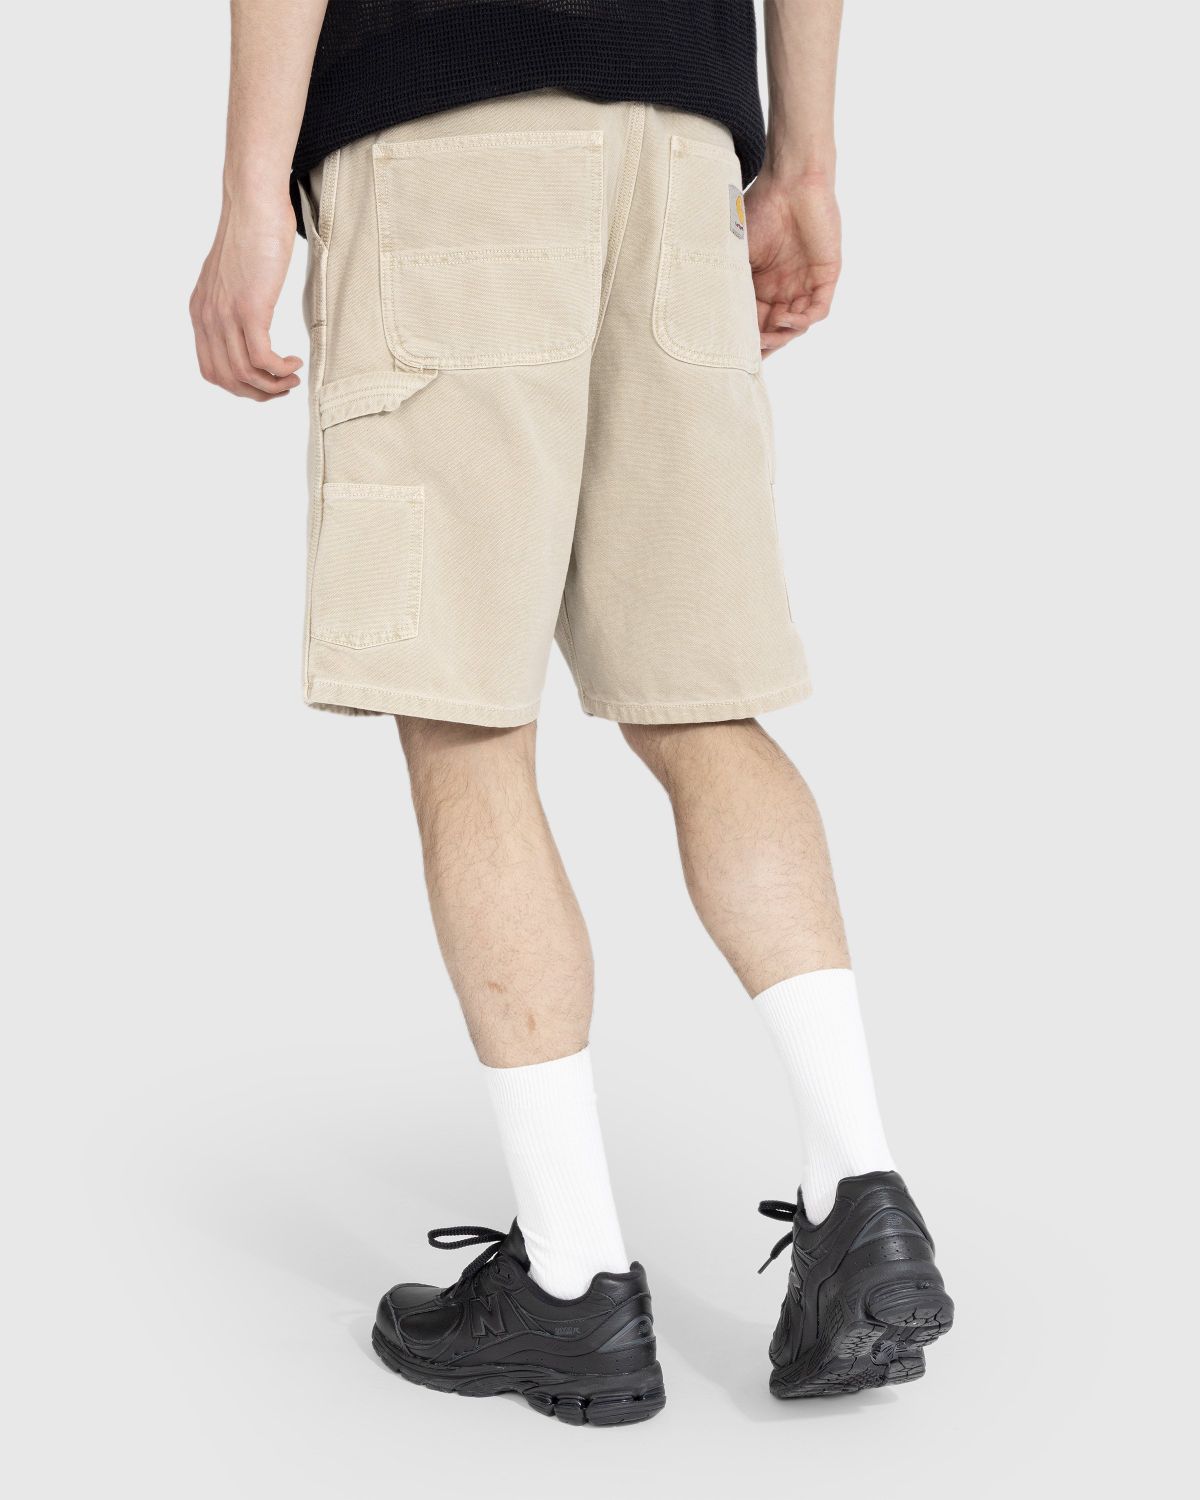 Carhartt WIP – Double Knee Short Brown - Shorts - Brown - Image 3